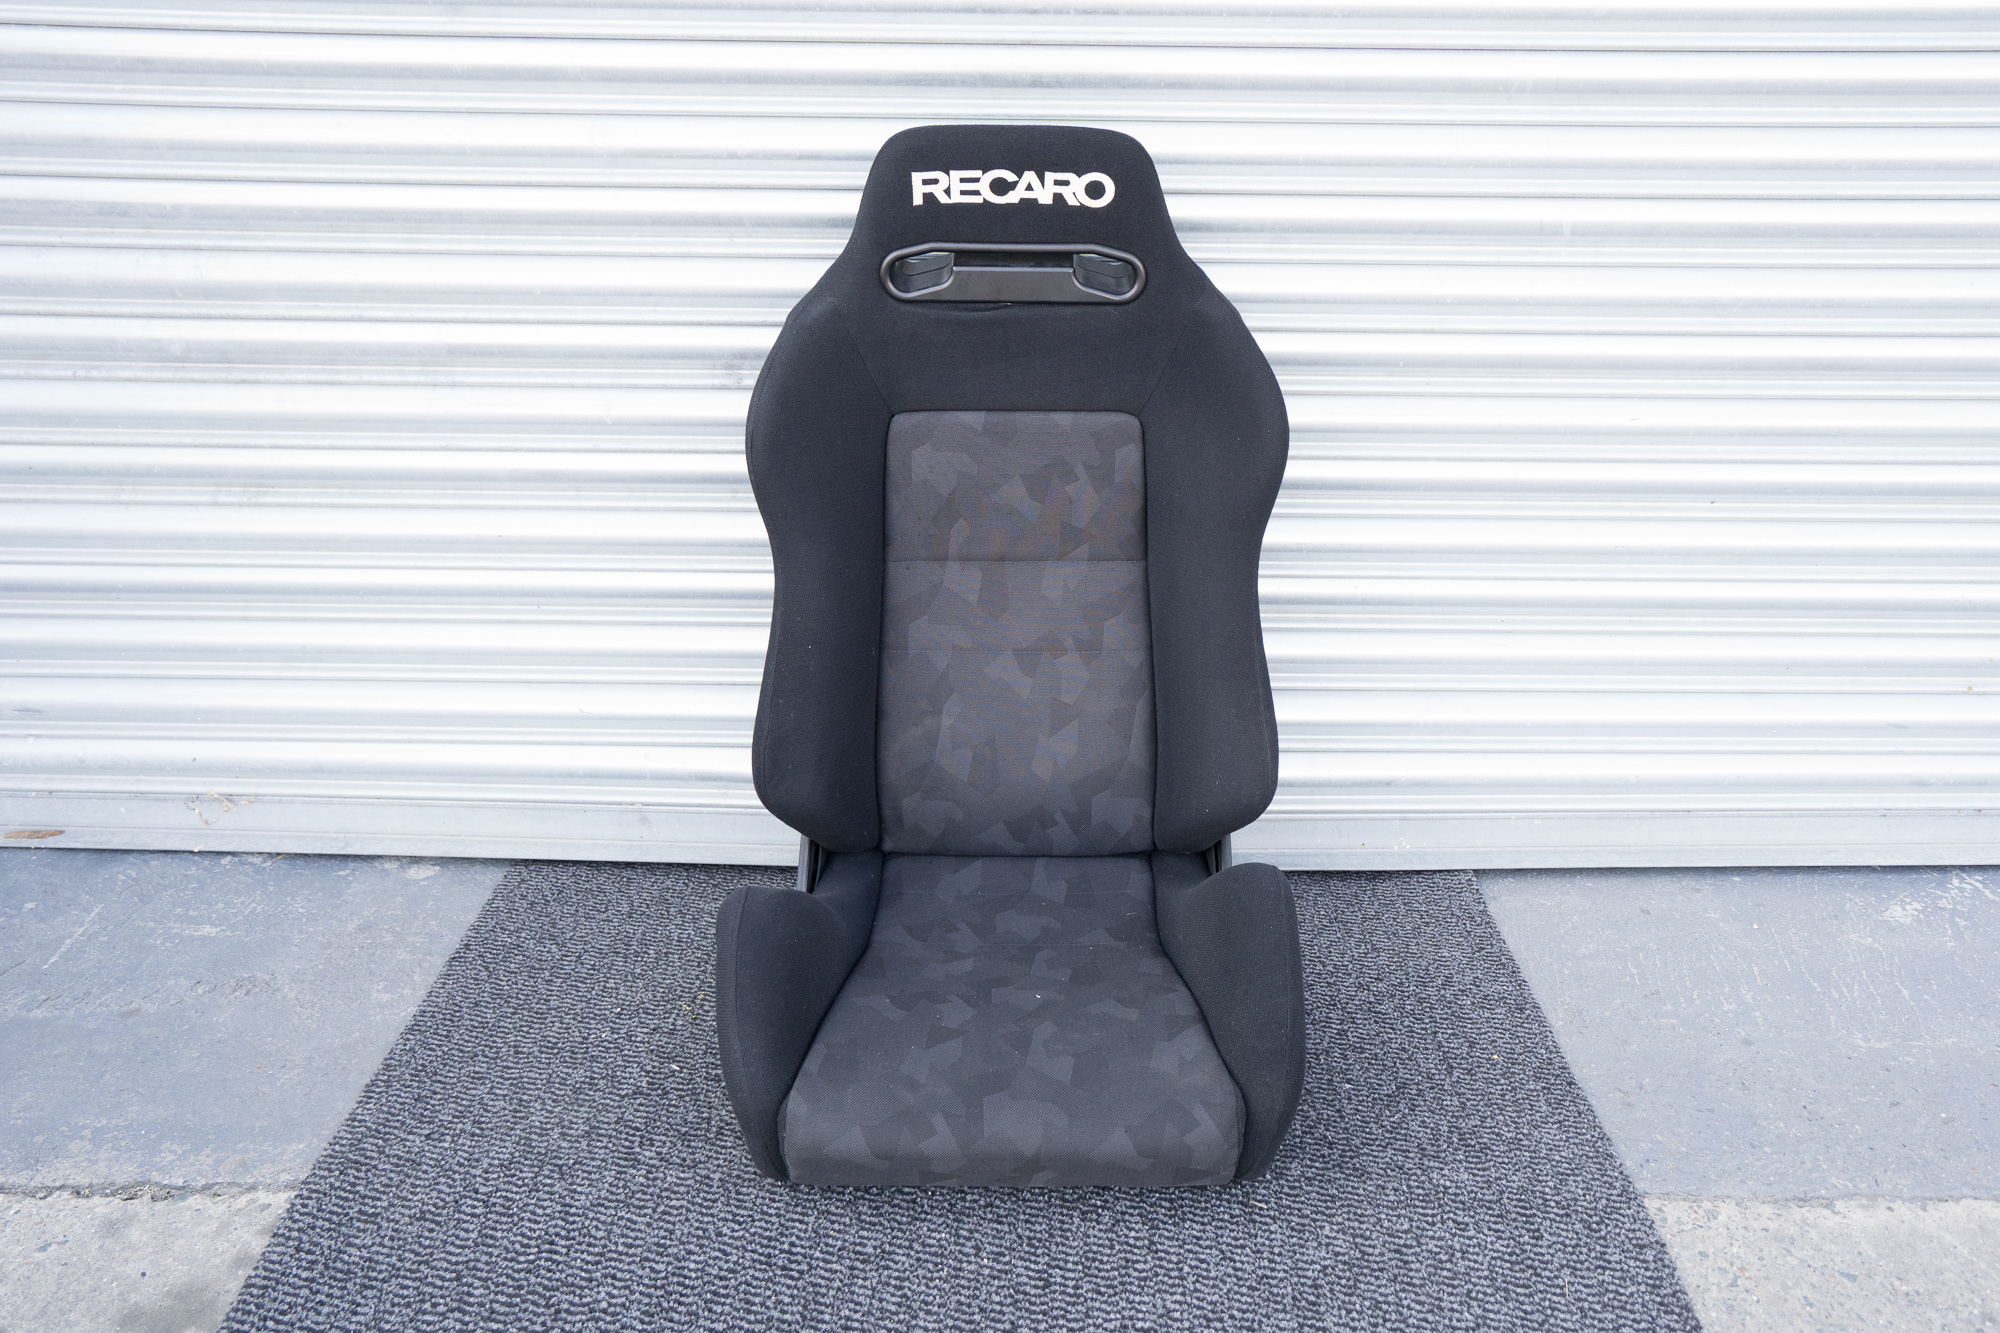 RECARO SR3 ARTISTA BLACK RECLINER RACING SEAT